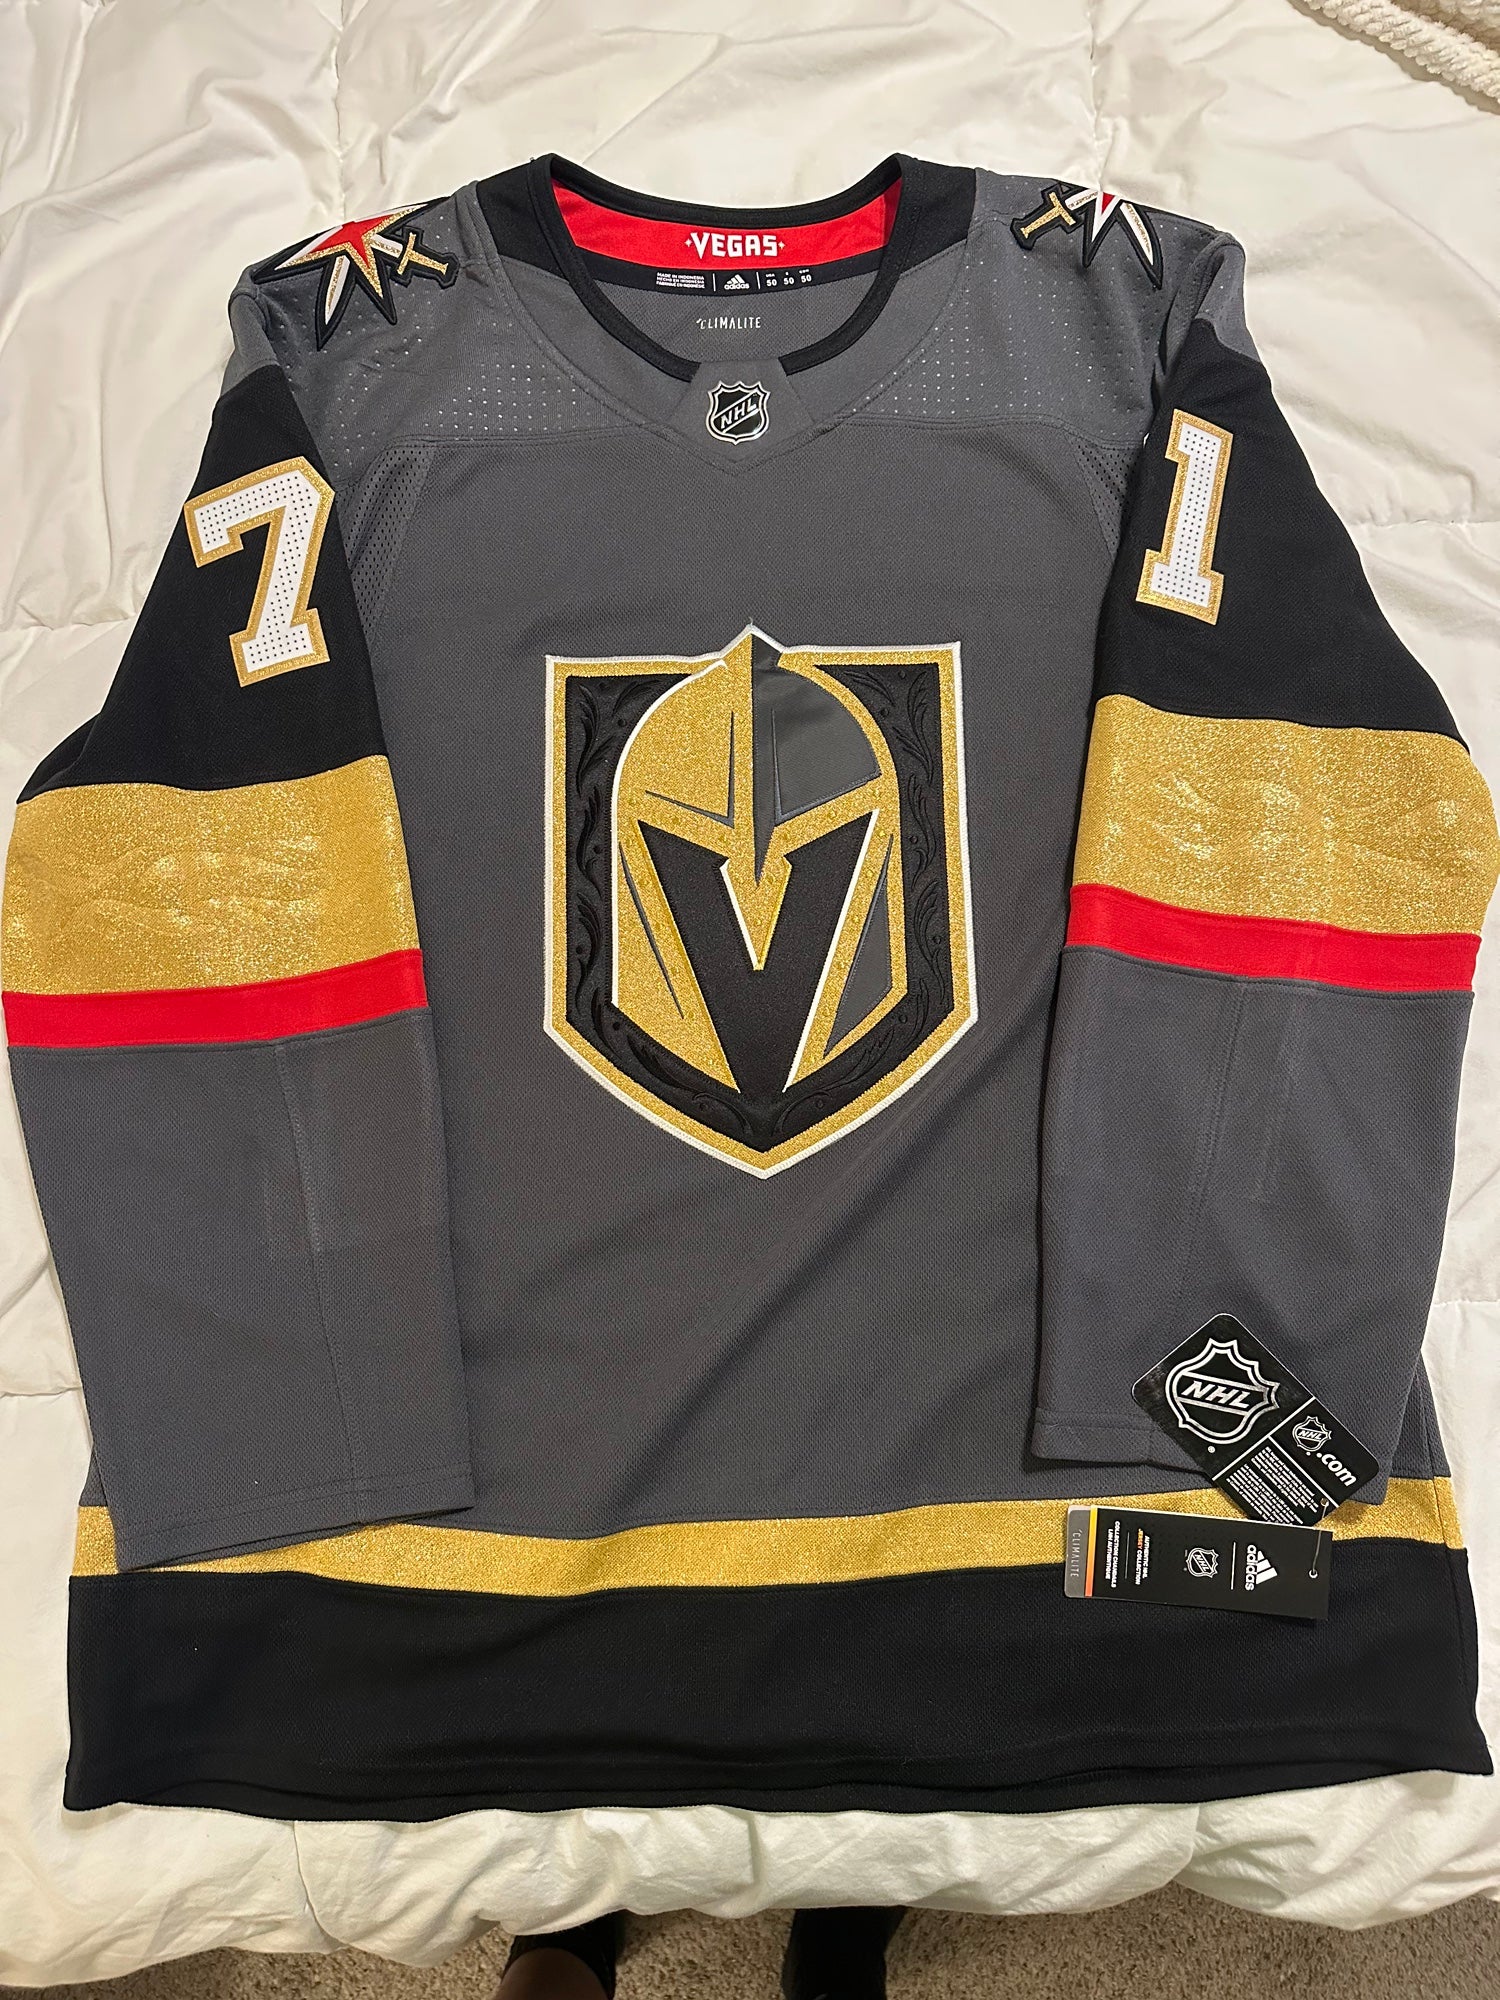 NWT Adidas NHL Las Vegas Golden Knights Away White Hockey Jersey Men's Size  52